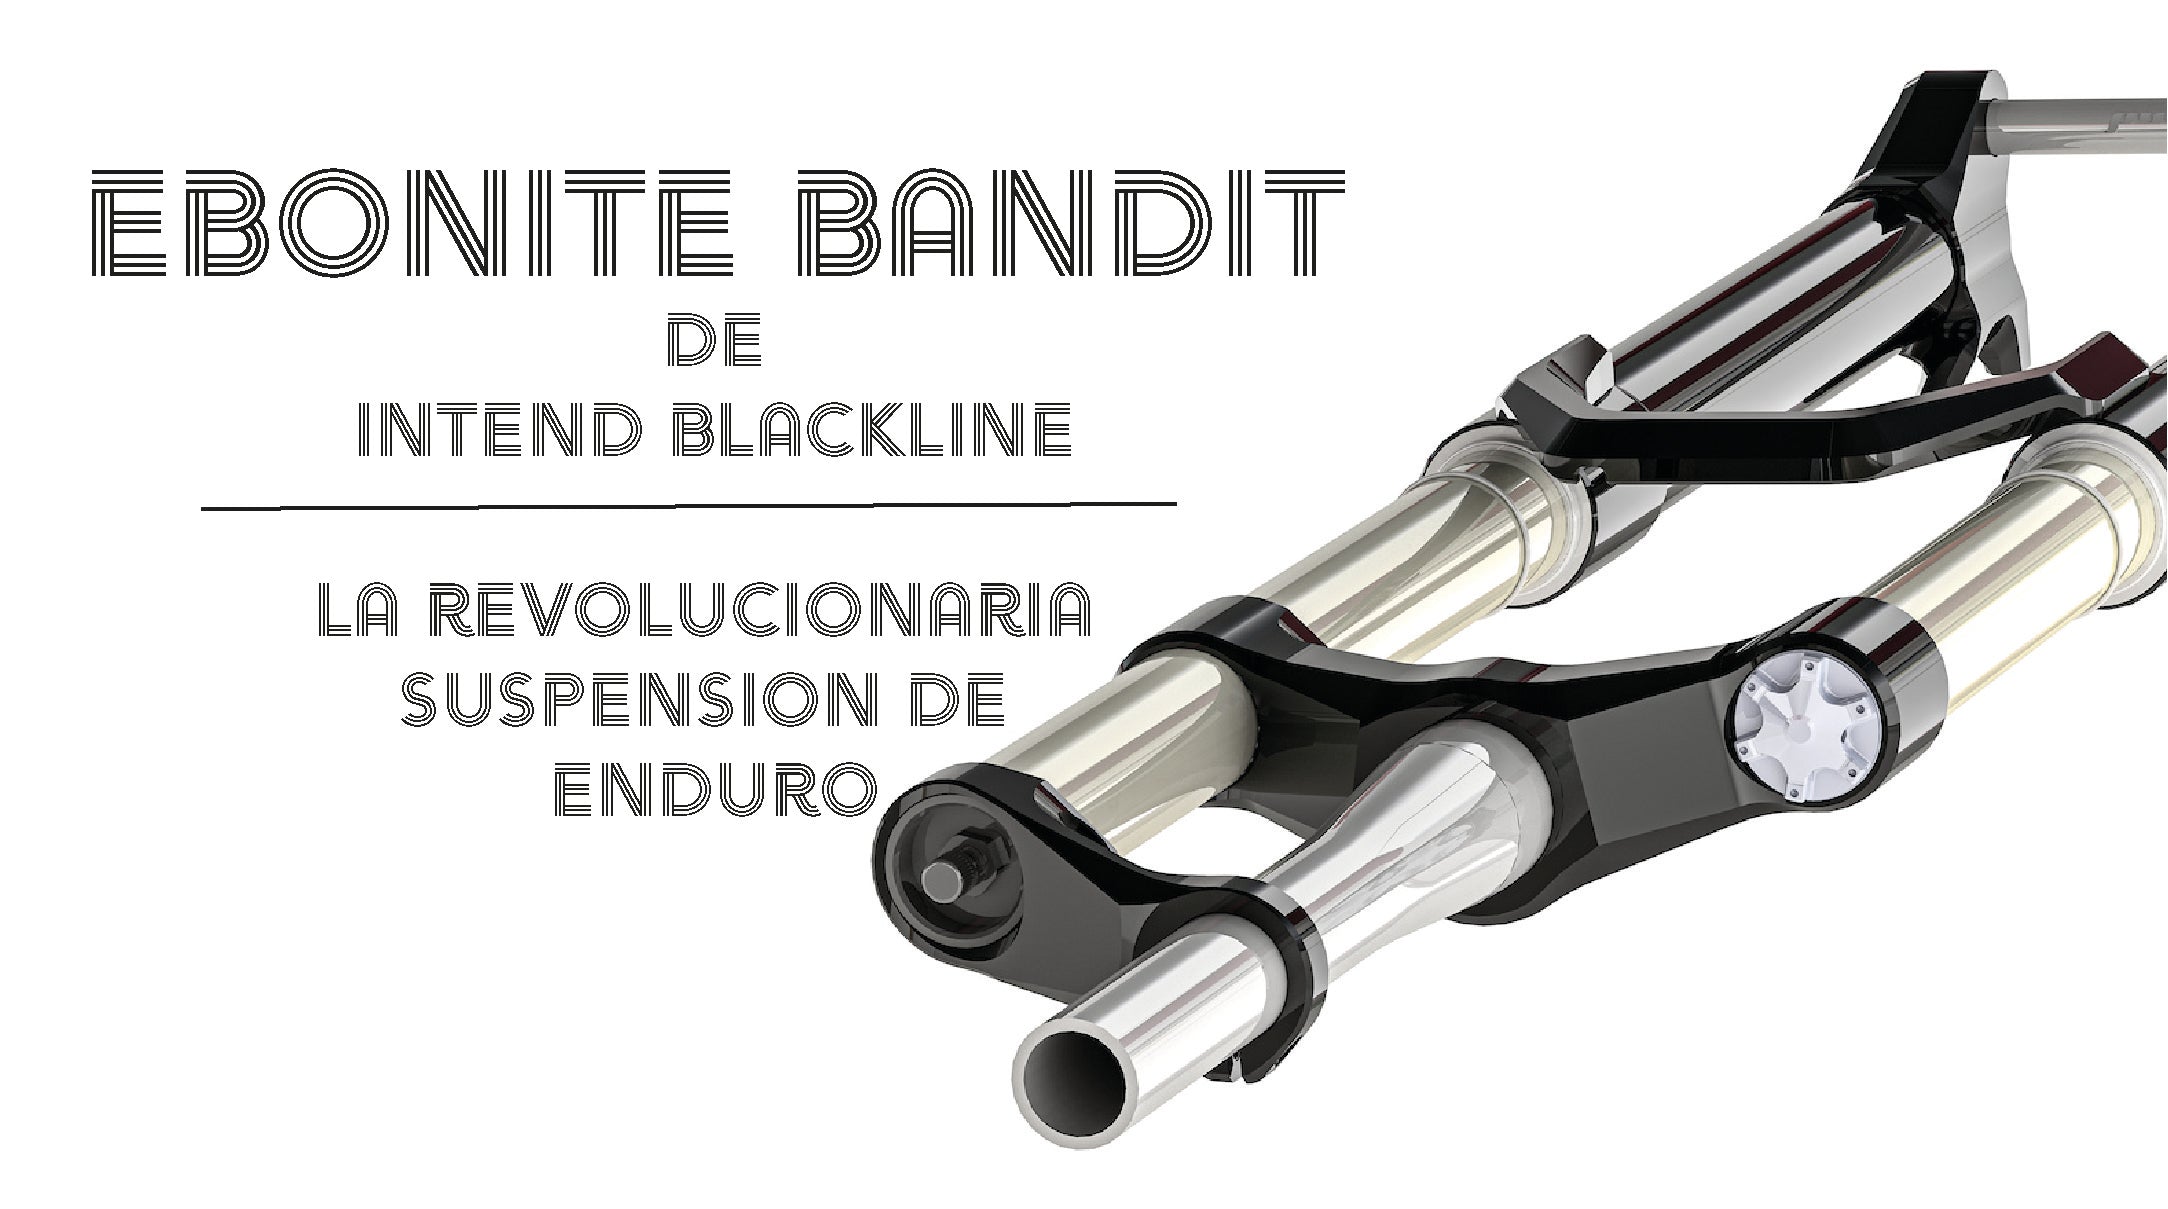 Te presentamos  la revolucionaria  Ebonite Bandit